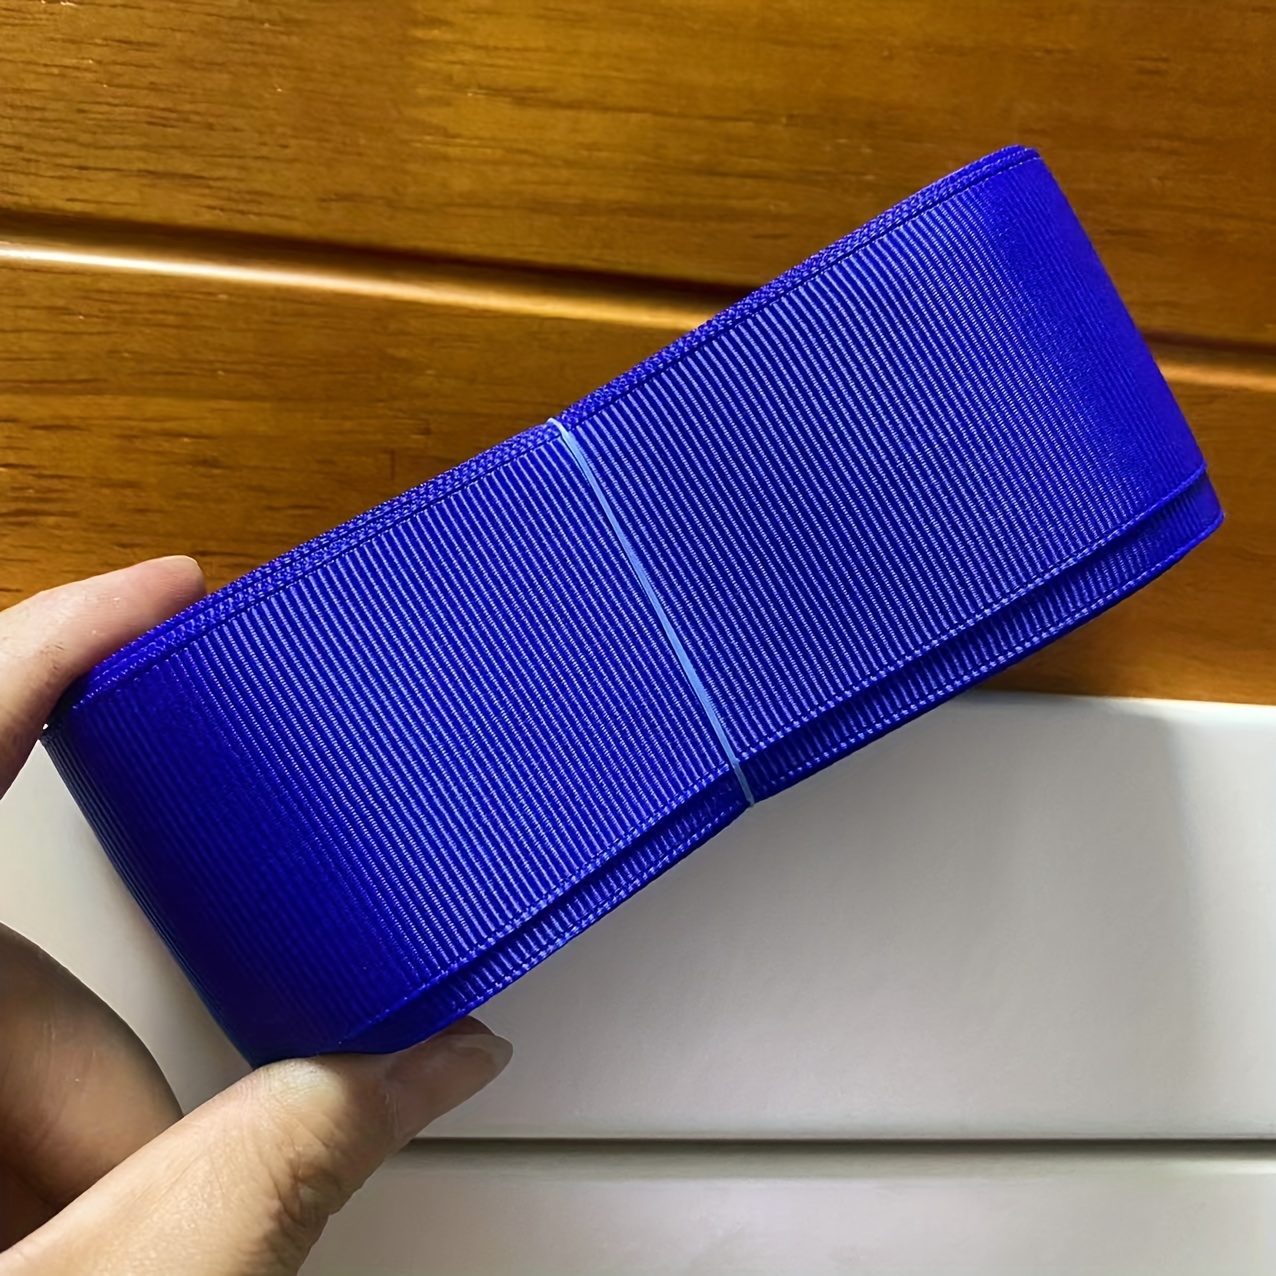 Blue Ribbon, Royal Blue Grosgrain Ribbon 1 Inch Wide X 5 Yards